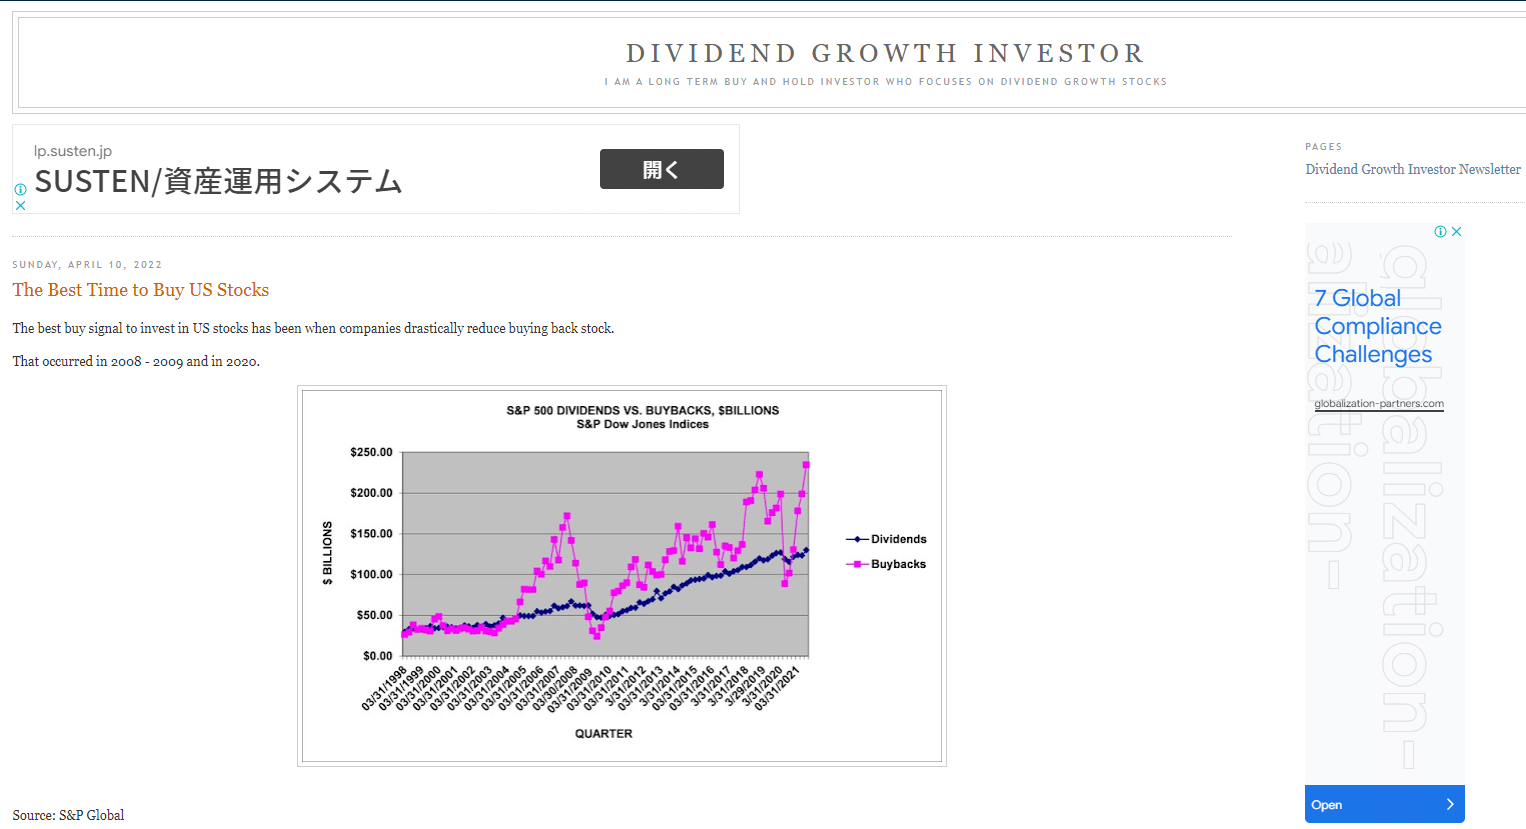 DIVIDEND GROWTH INVESTOR